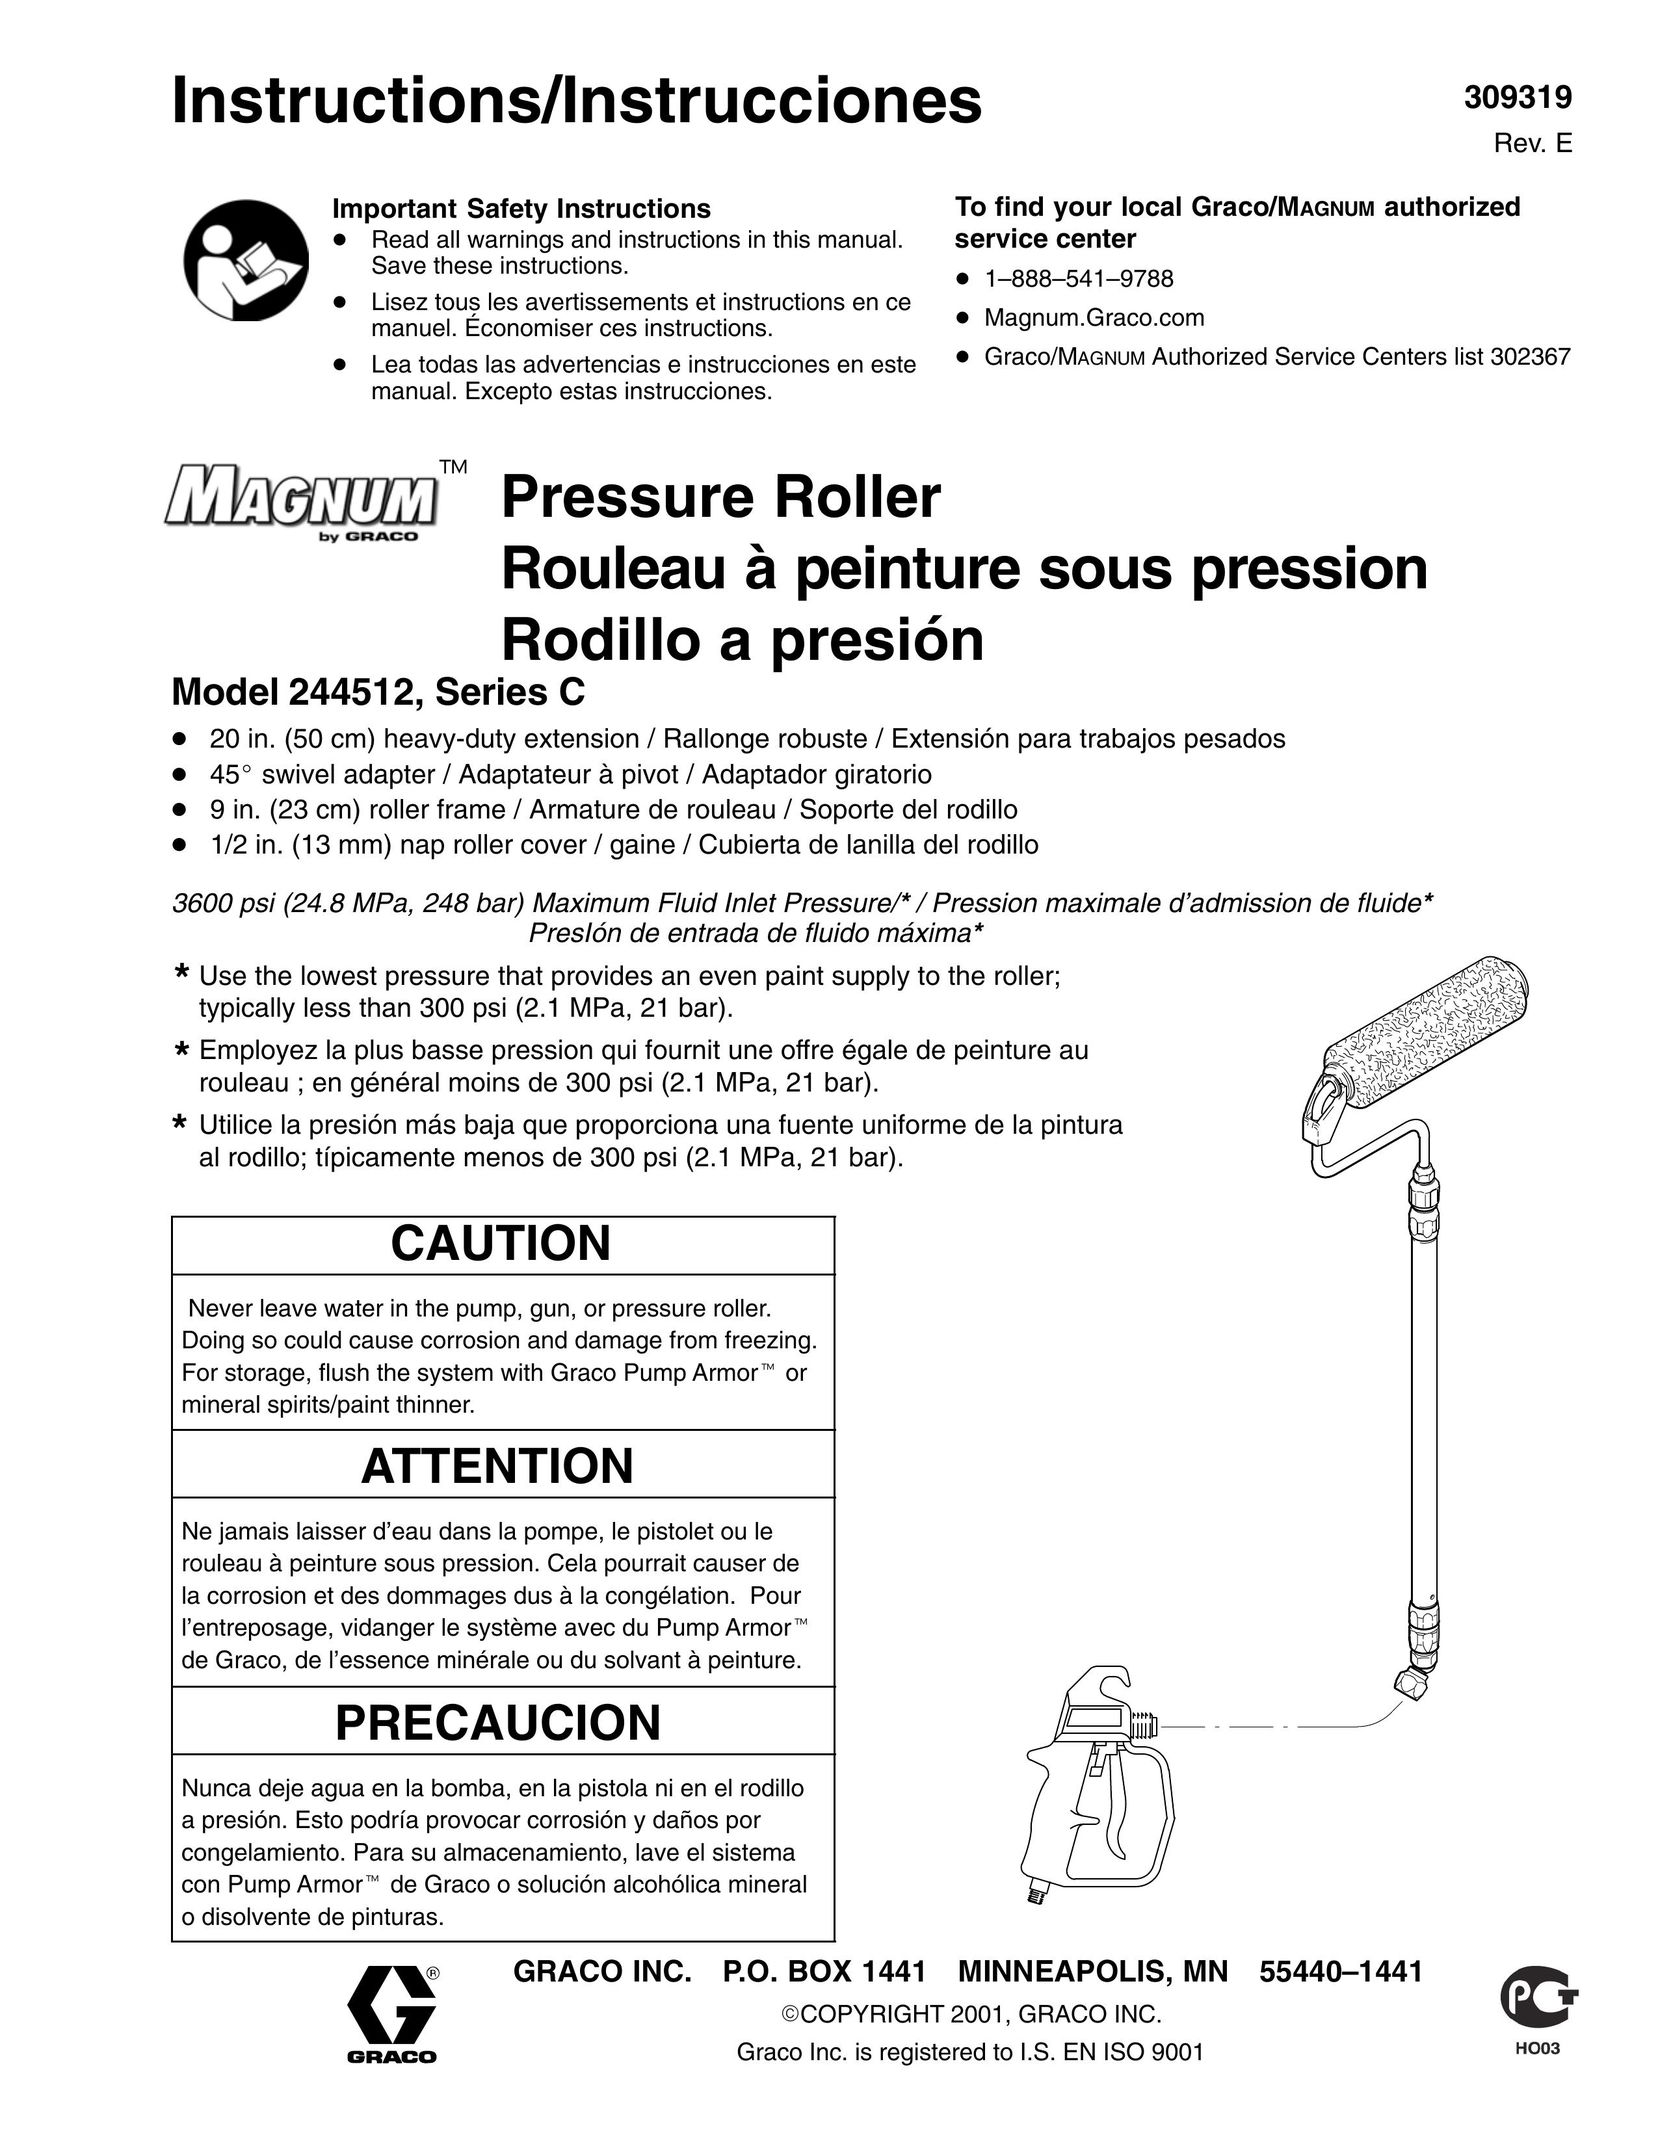 Graco Inc. 309319 Power Roller User Manual